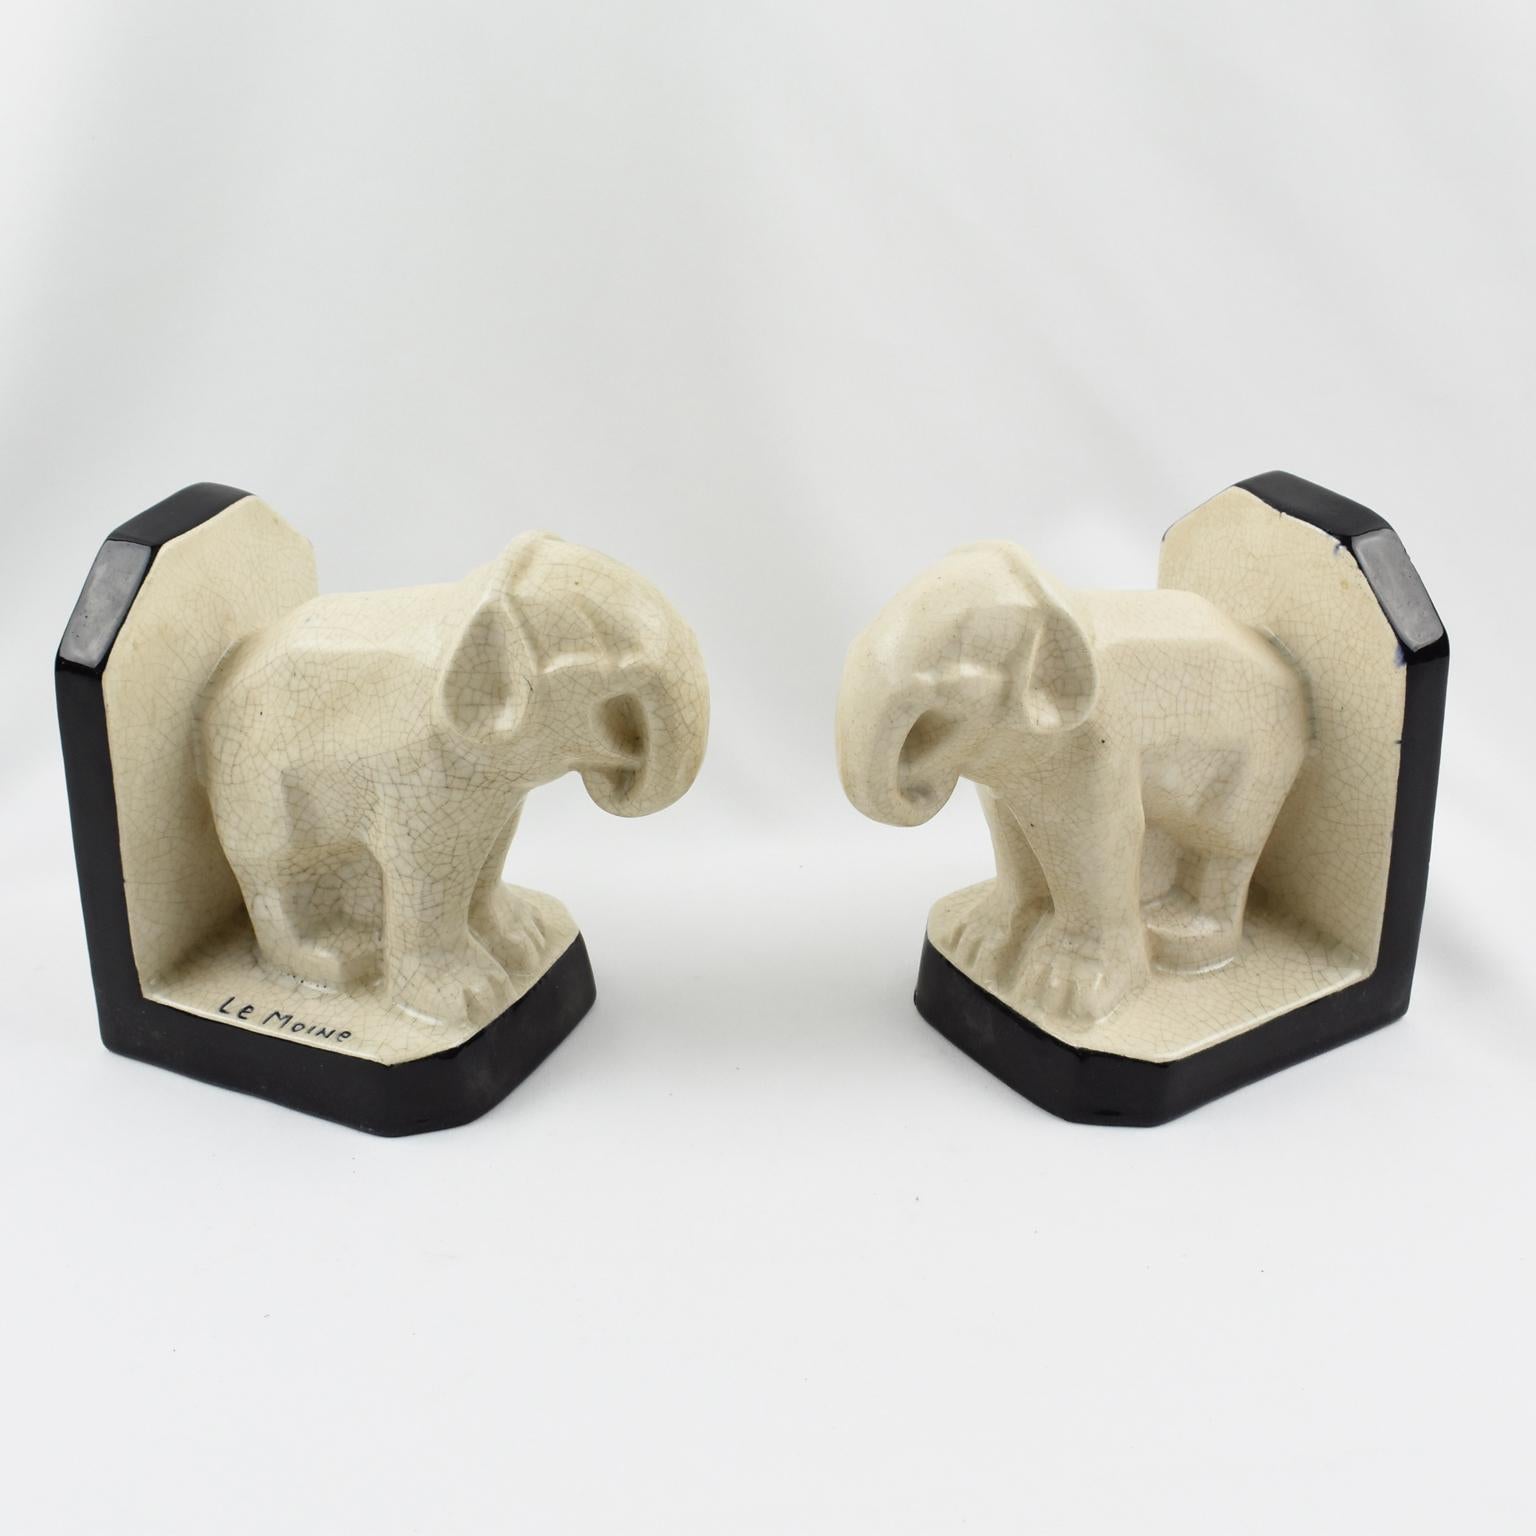 Art Deco Crackle Ceramic Elephant Sculpture Bookends by Le Moine, France 1930s For Sale 1